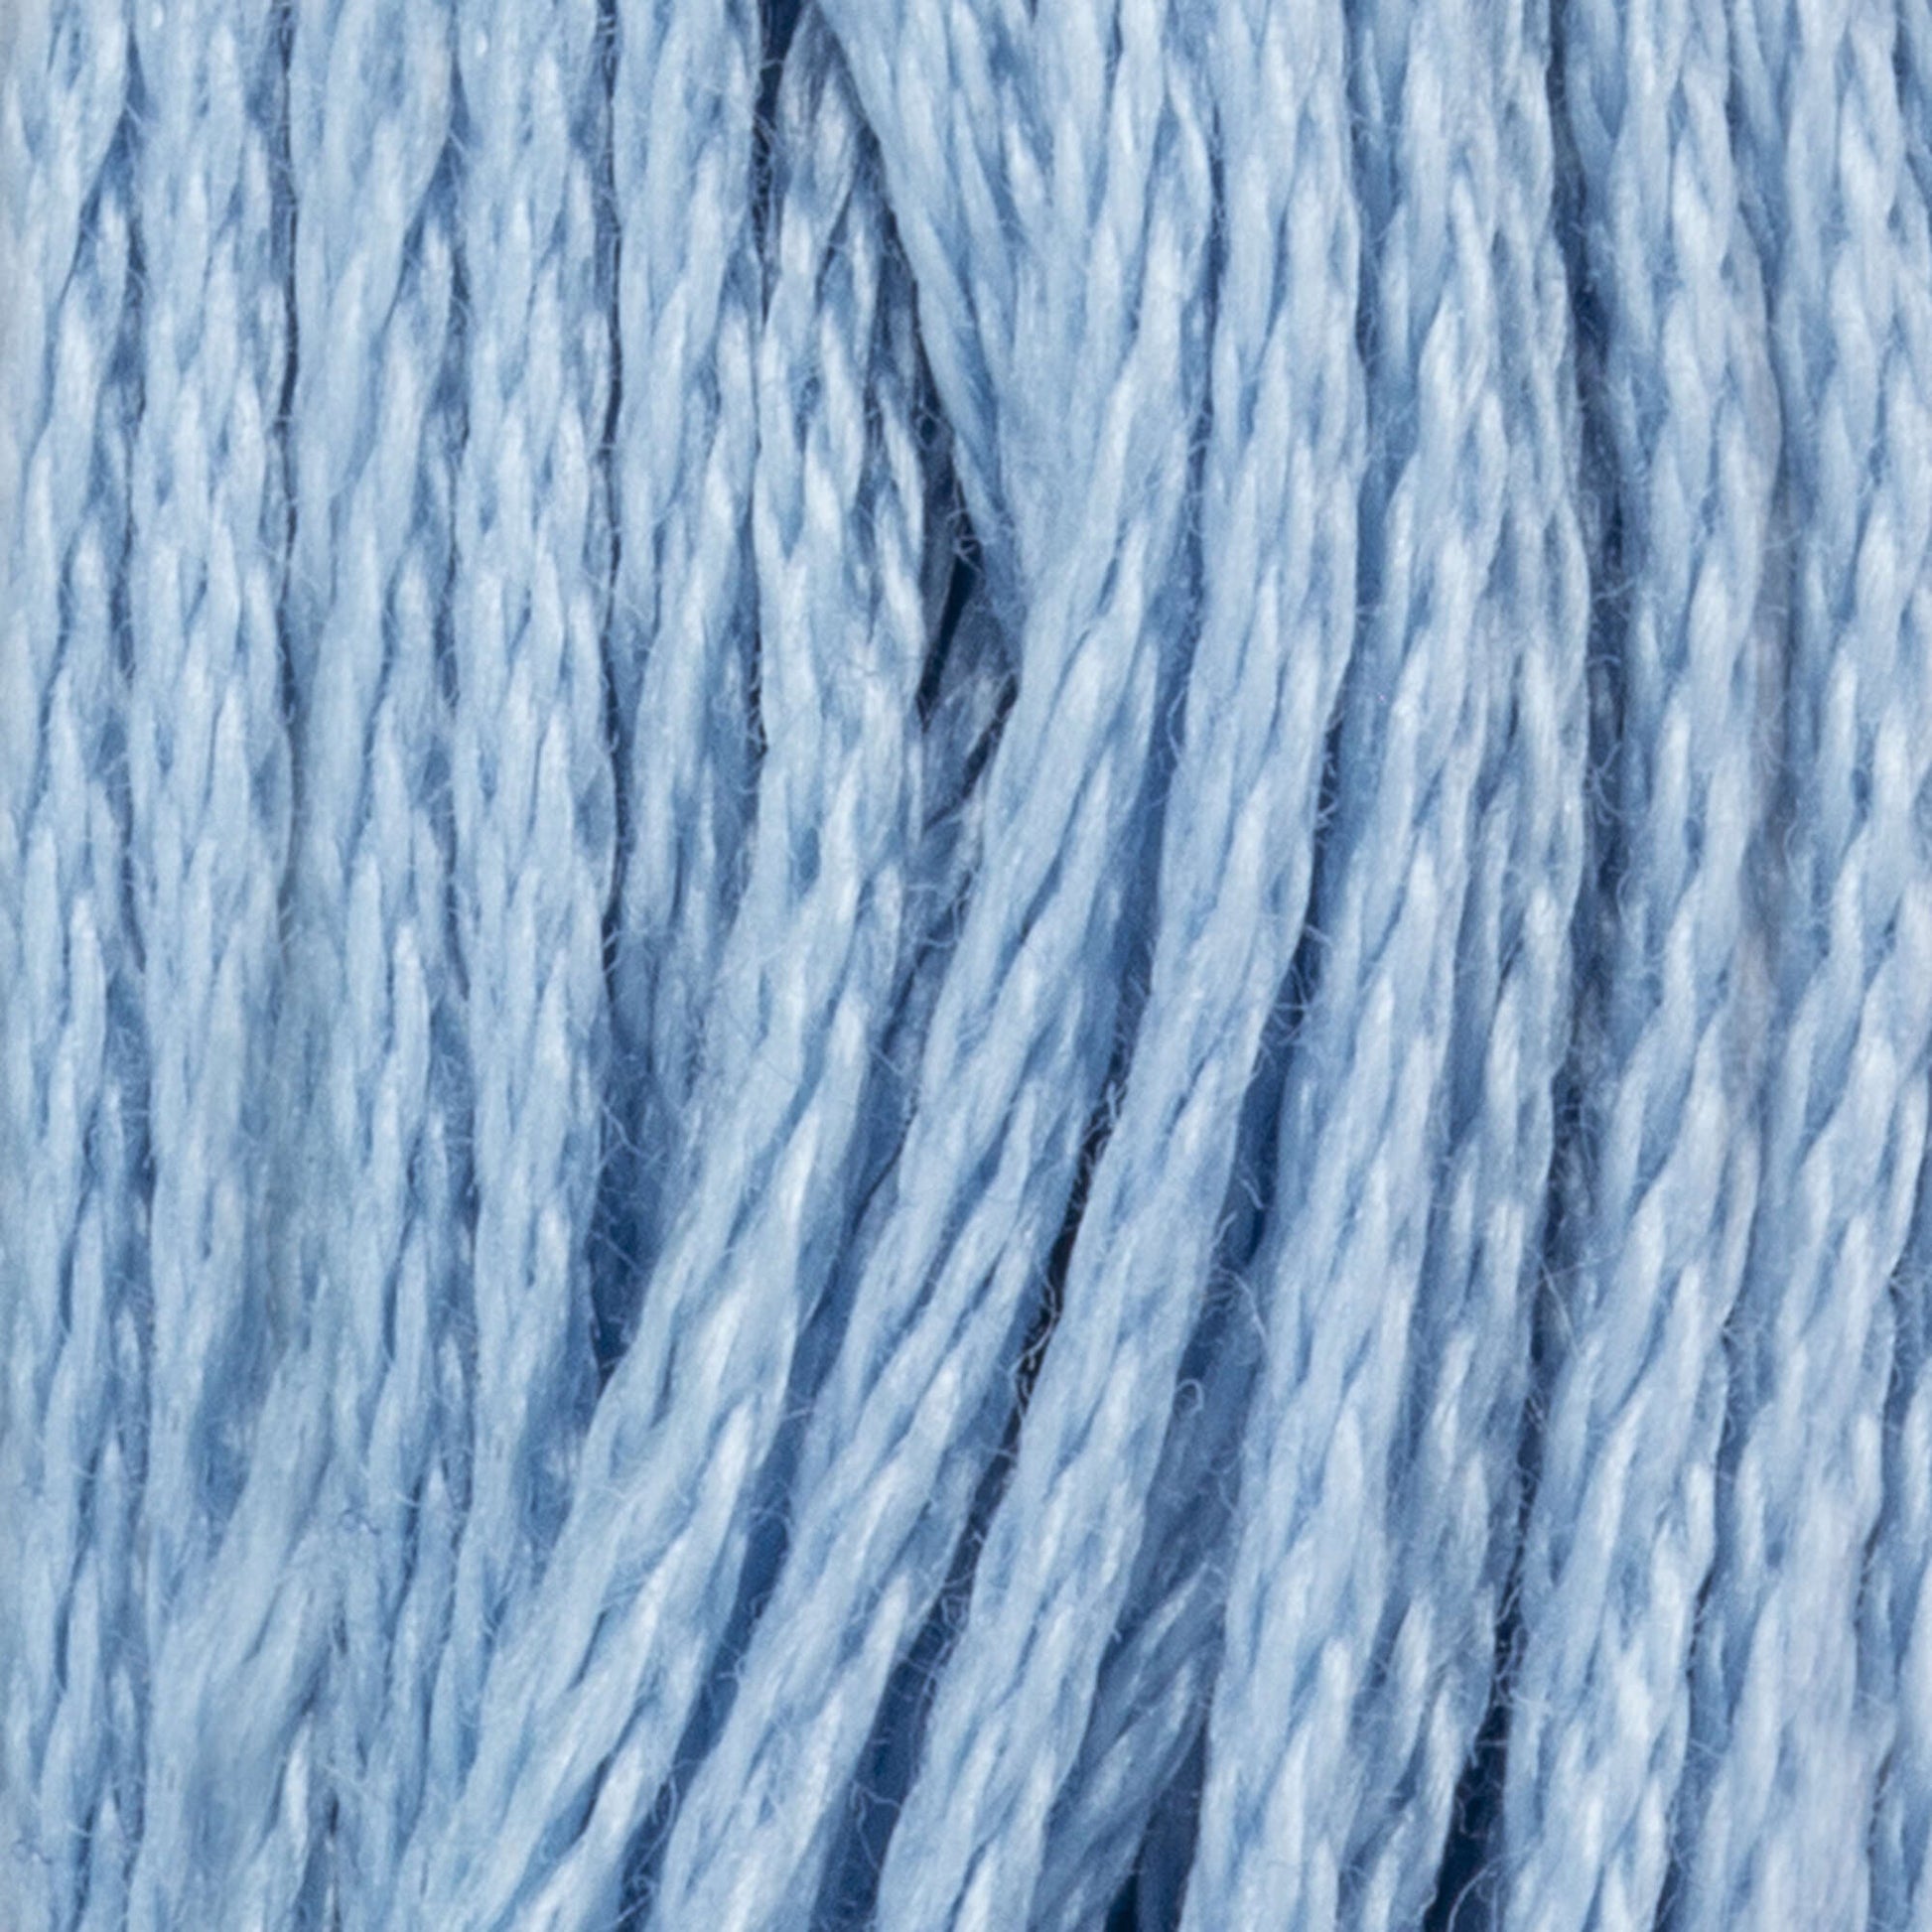 Anchor Stranded Cotton